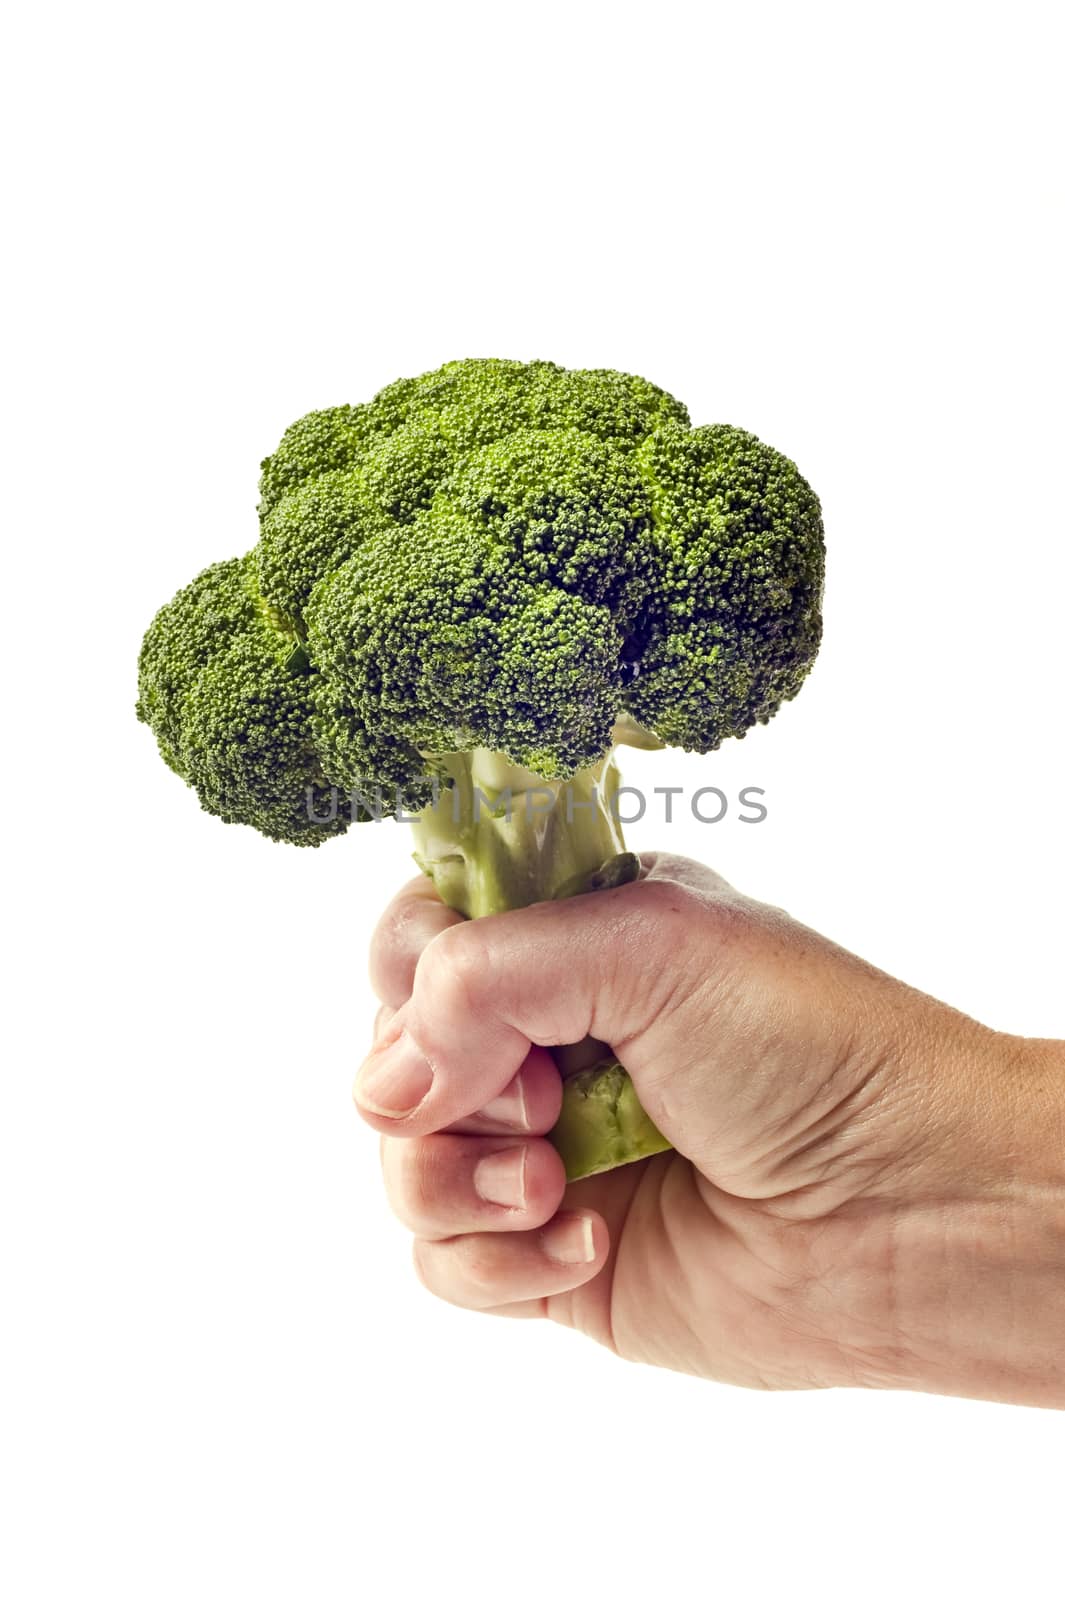 Broccoli Handful by stockbuster1